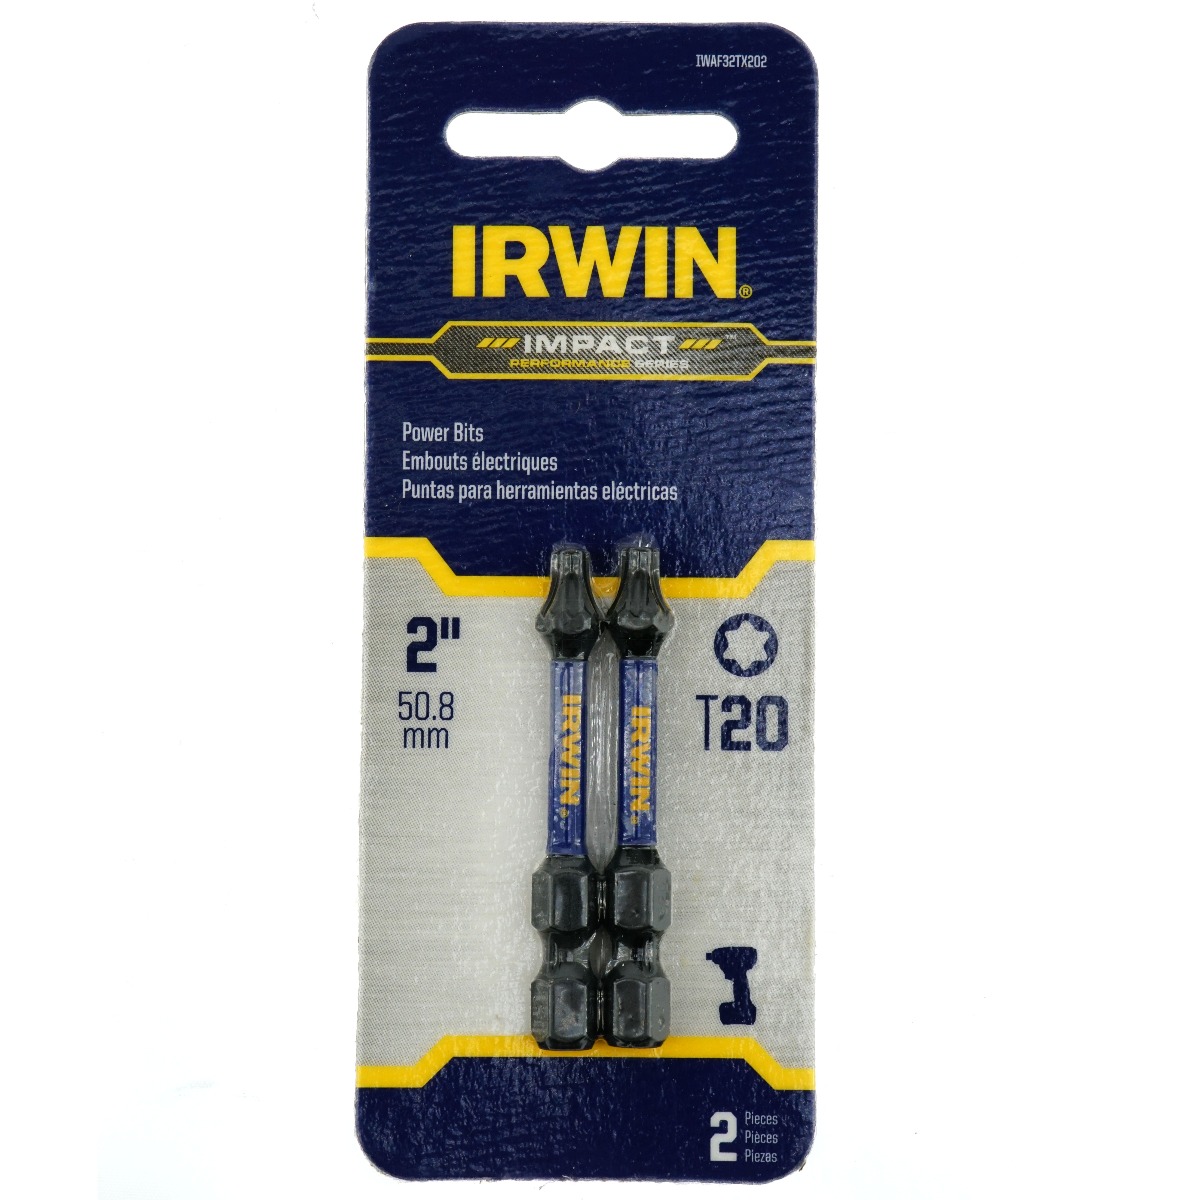 Irwin IWAF32TX202 2" Impact T20 Torx Power Bits, 1/4" Drive, 2 Pack